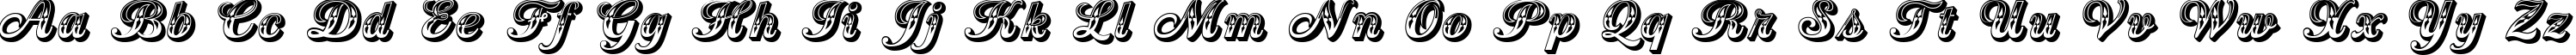 Пример написания английского алфавита шрифтом Country Western Script